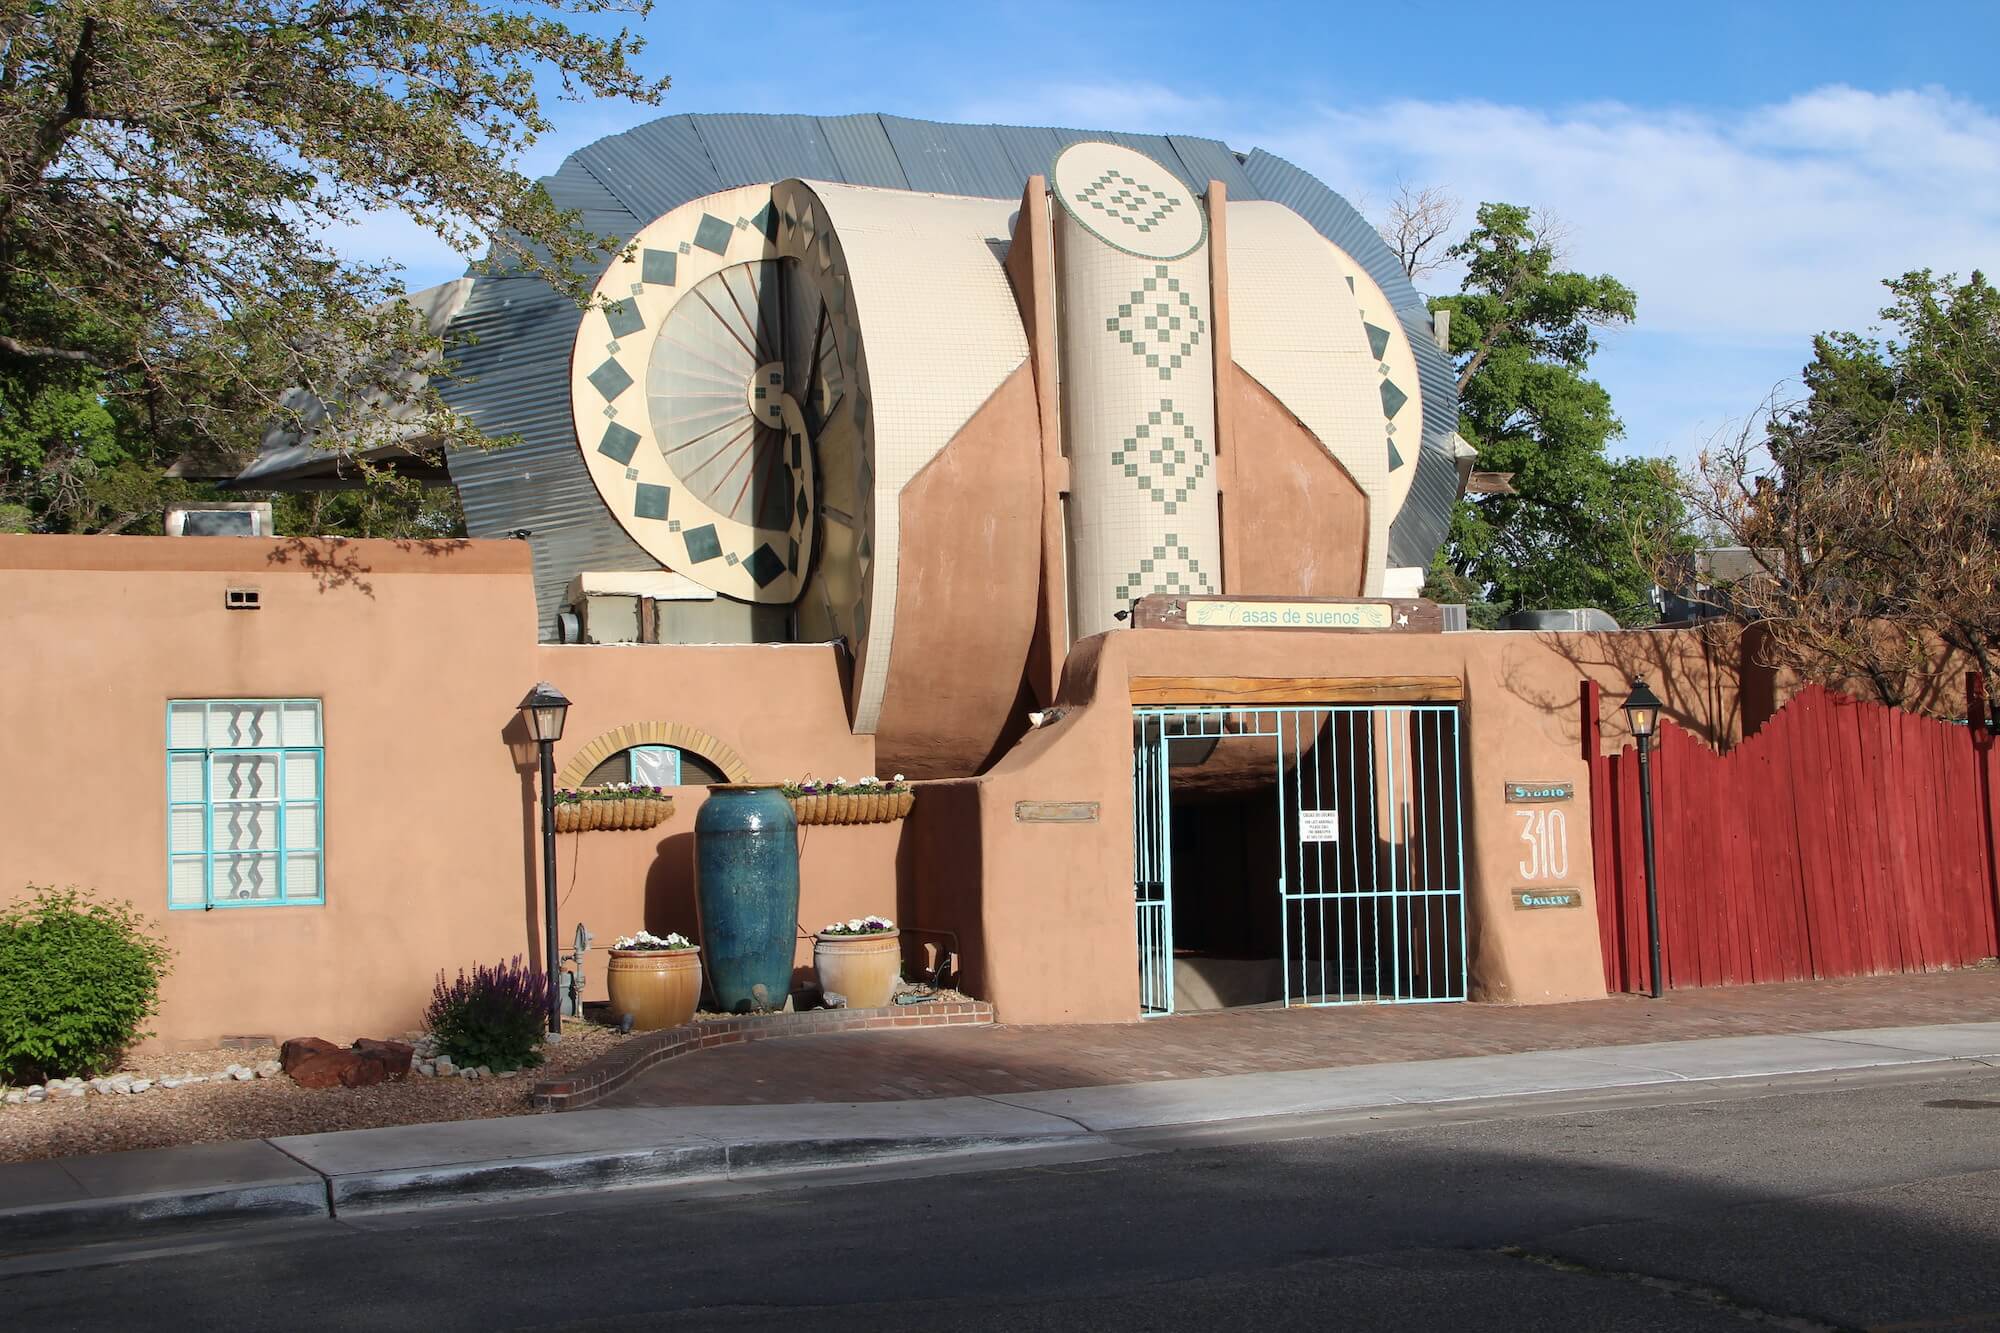 Picture of Casas de Suenos Old Town Historic Inn, Albuquerque New Mexico 310 Rio Grande Blvd SW, Albuquerque, NM 87104, United States